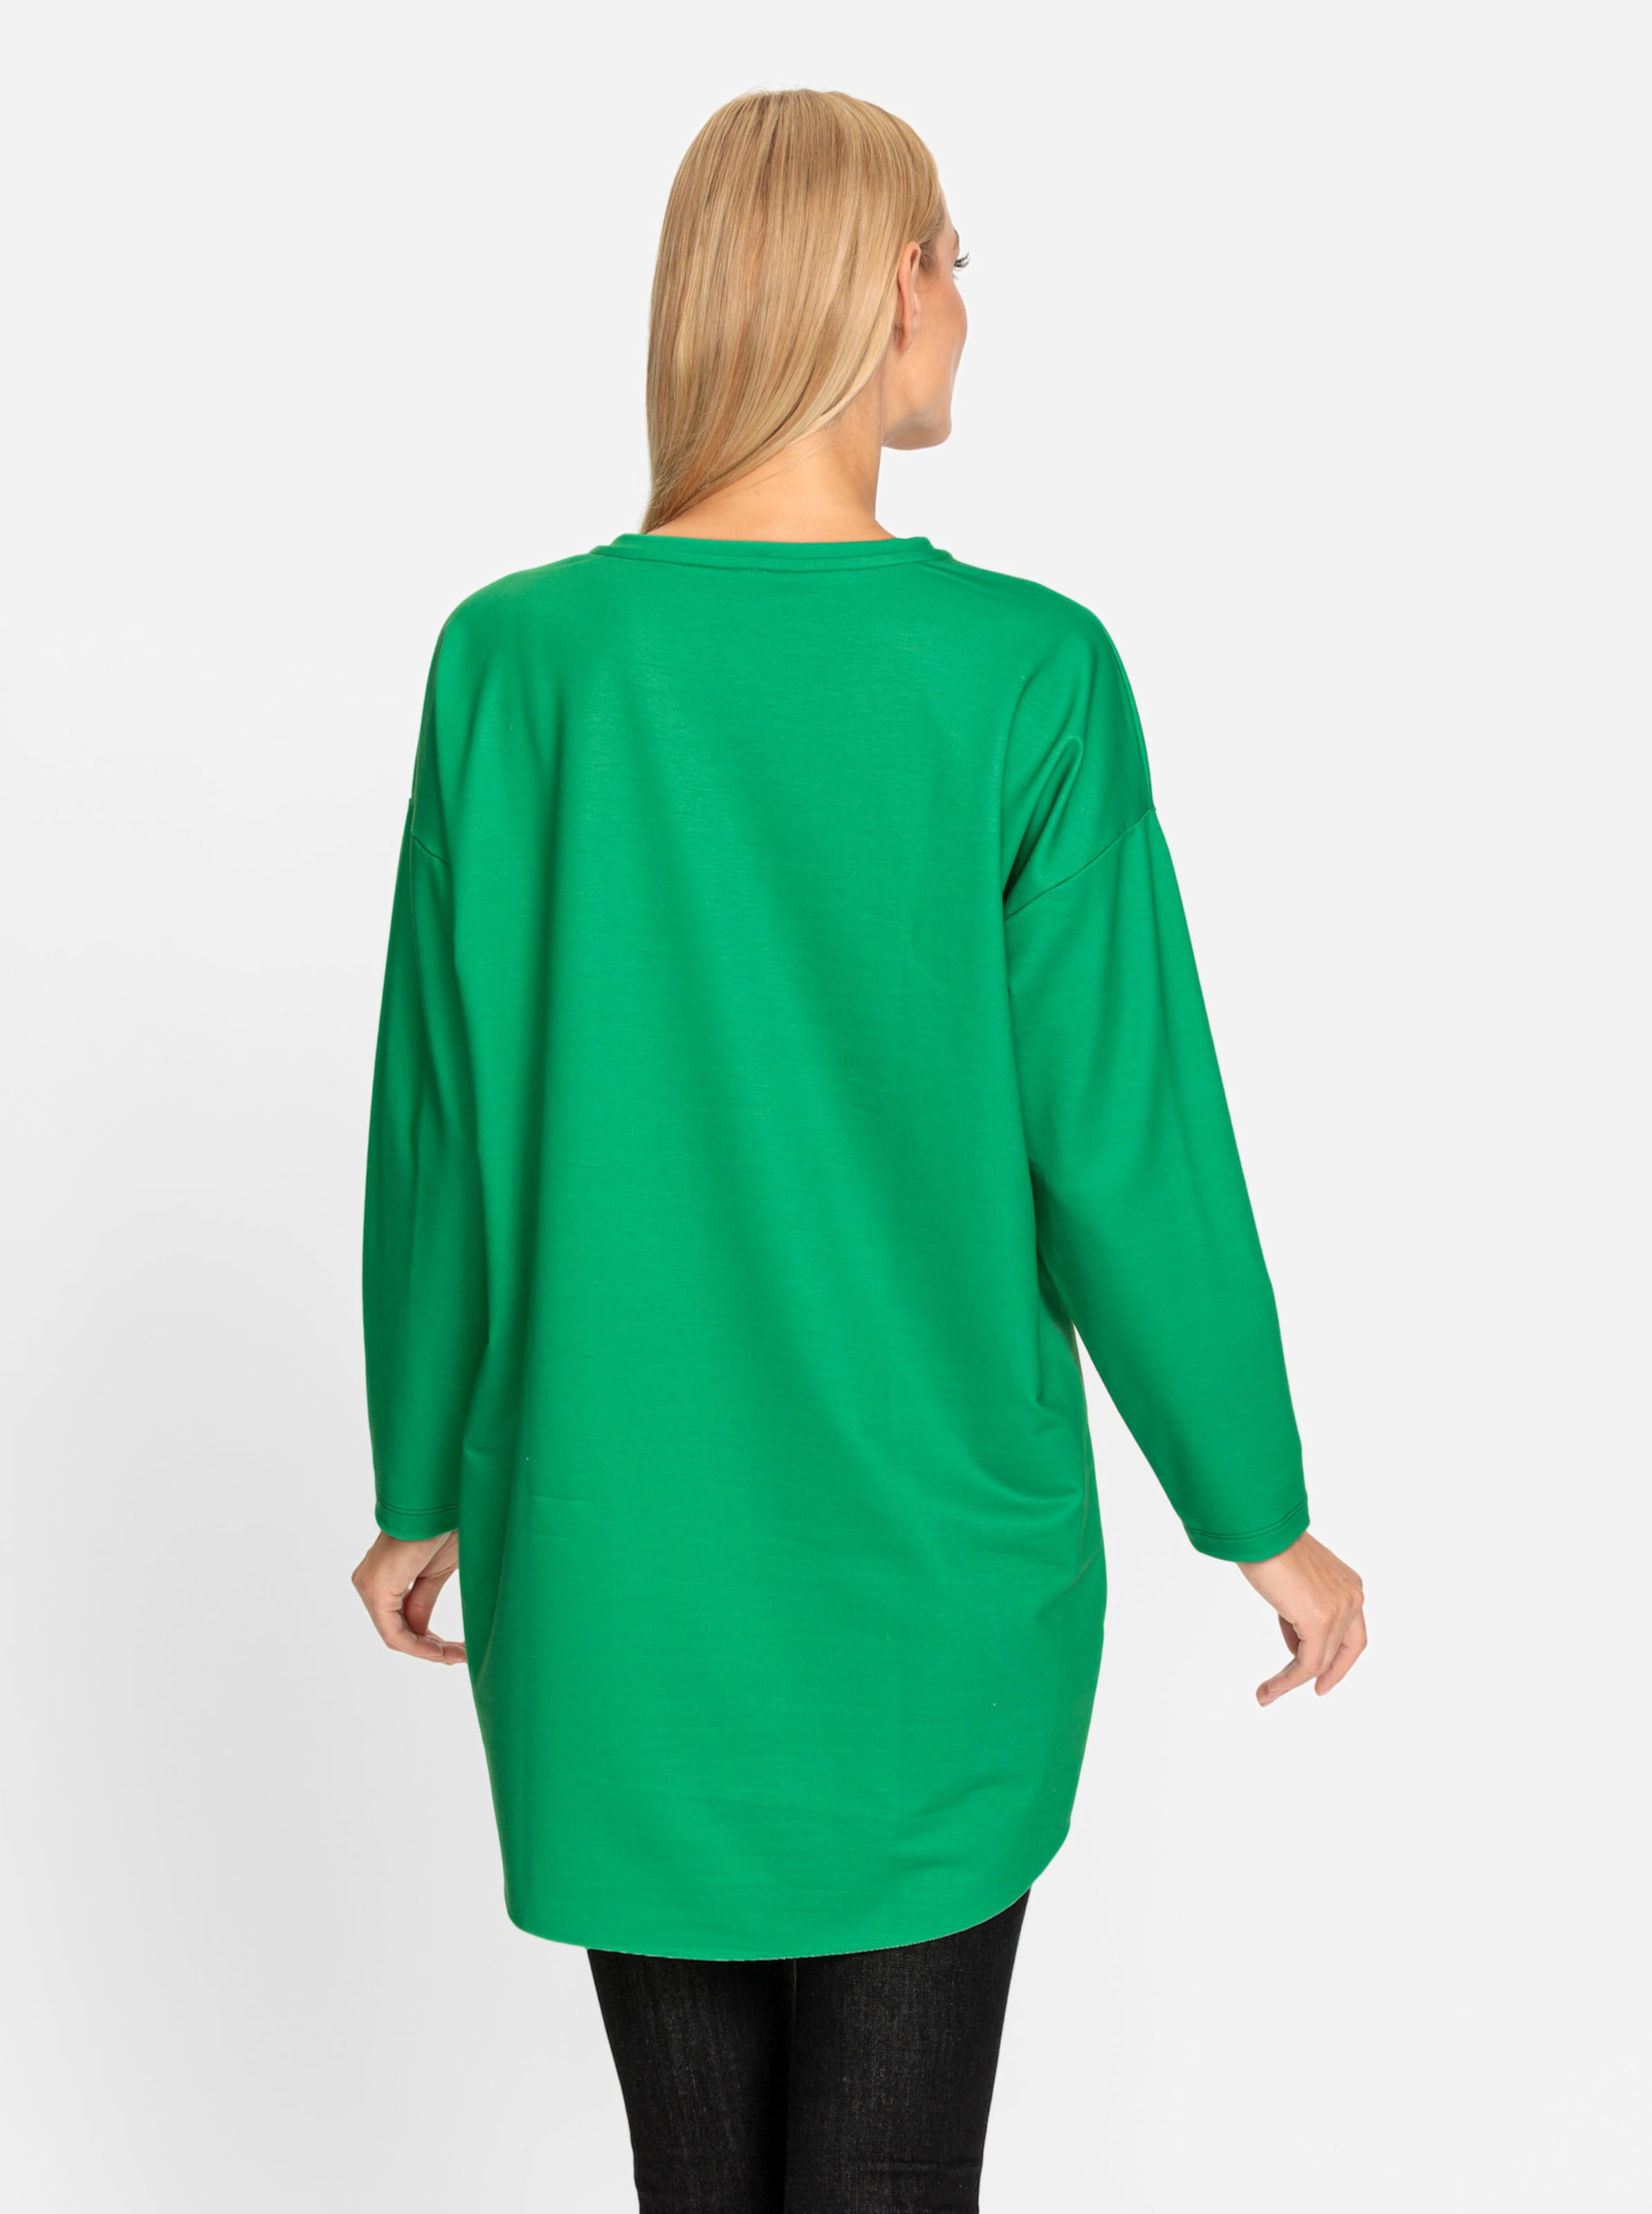 NICE günstig Kaufen-Longshirt in grasgrün von heine. Longshirt in grasgrün von heine <![CDATA[